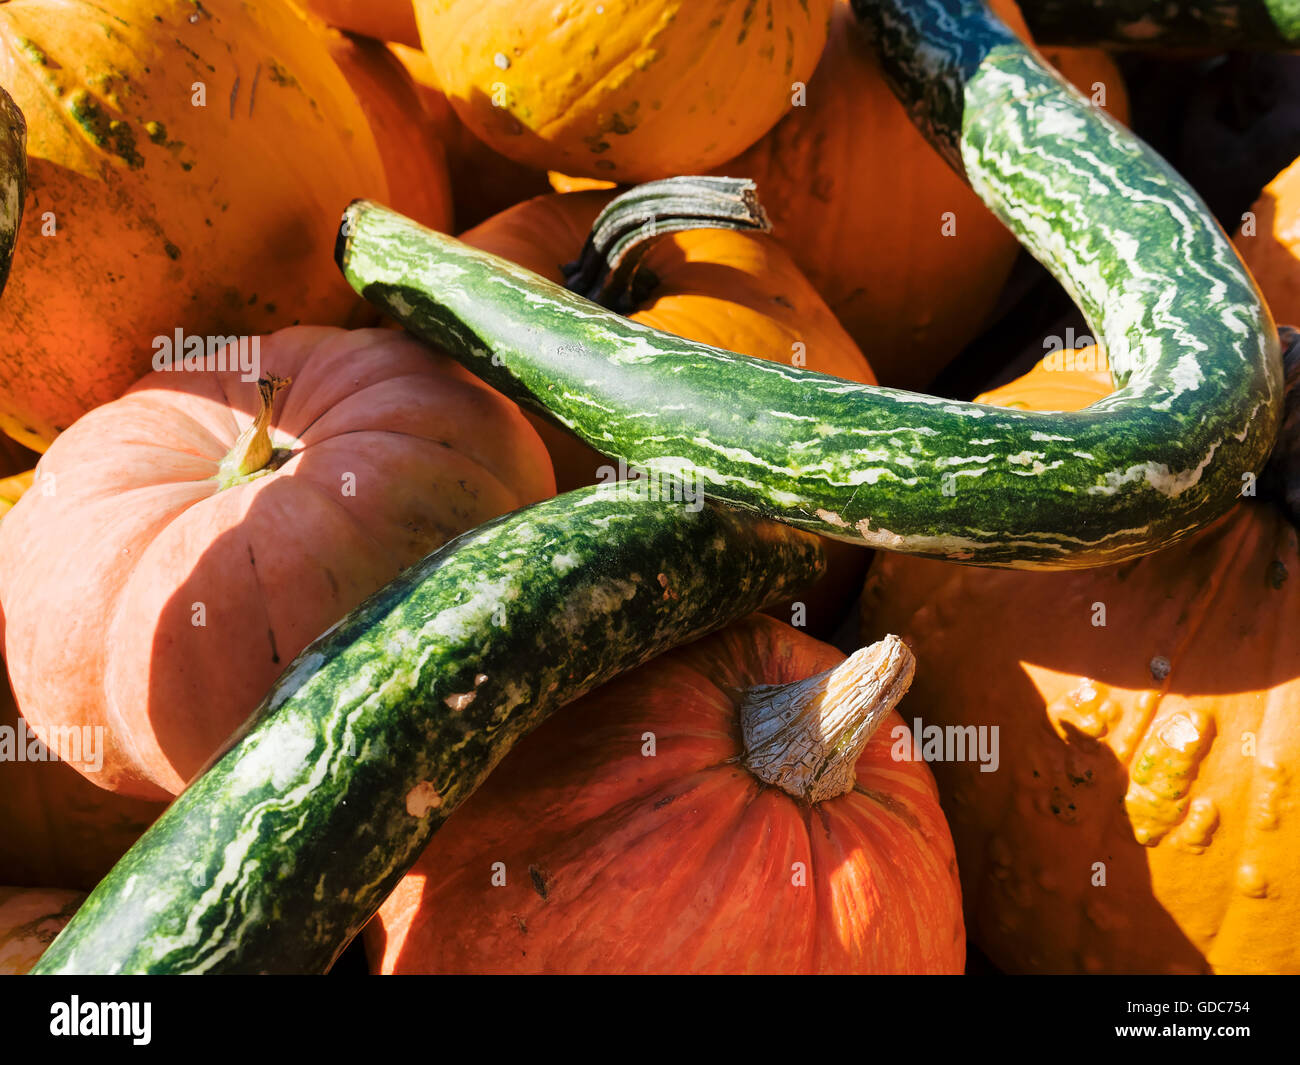 Ornamental pumpkins Stock Photo